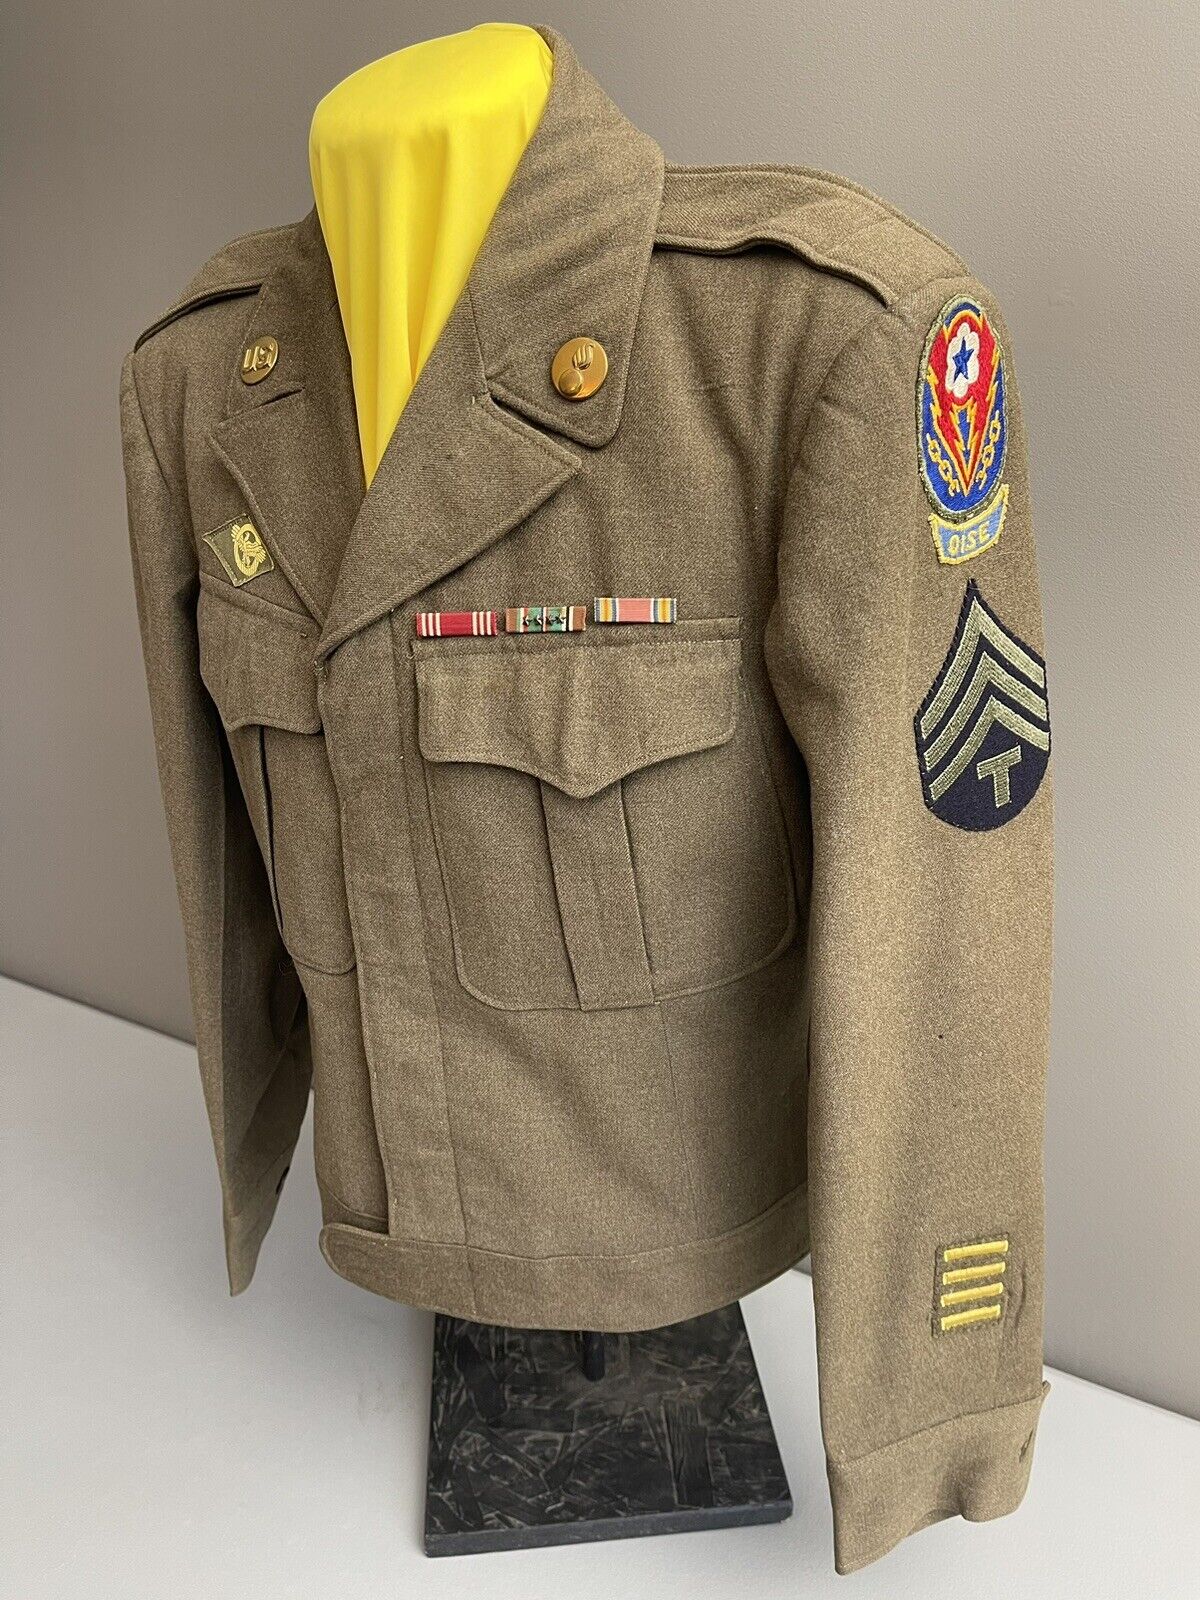 WWII U.S. Army Uniform, Ike Jacket ETO Communications OISE Zone Tab & 9th Army